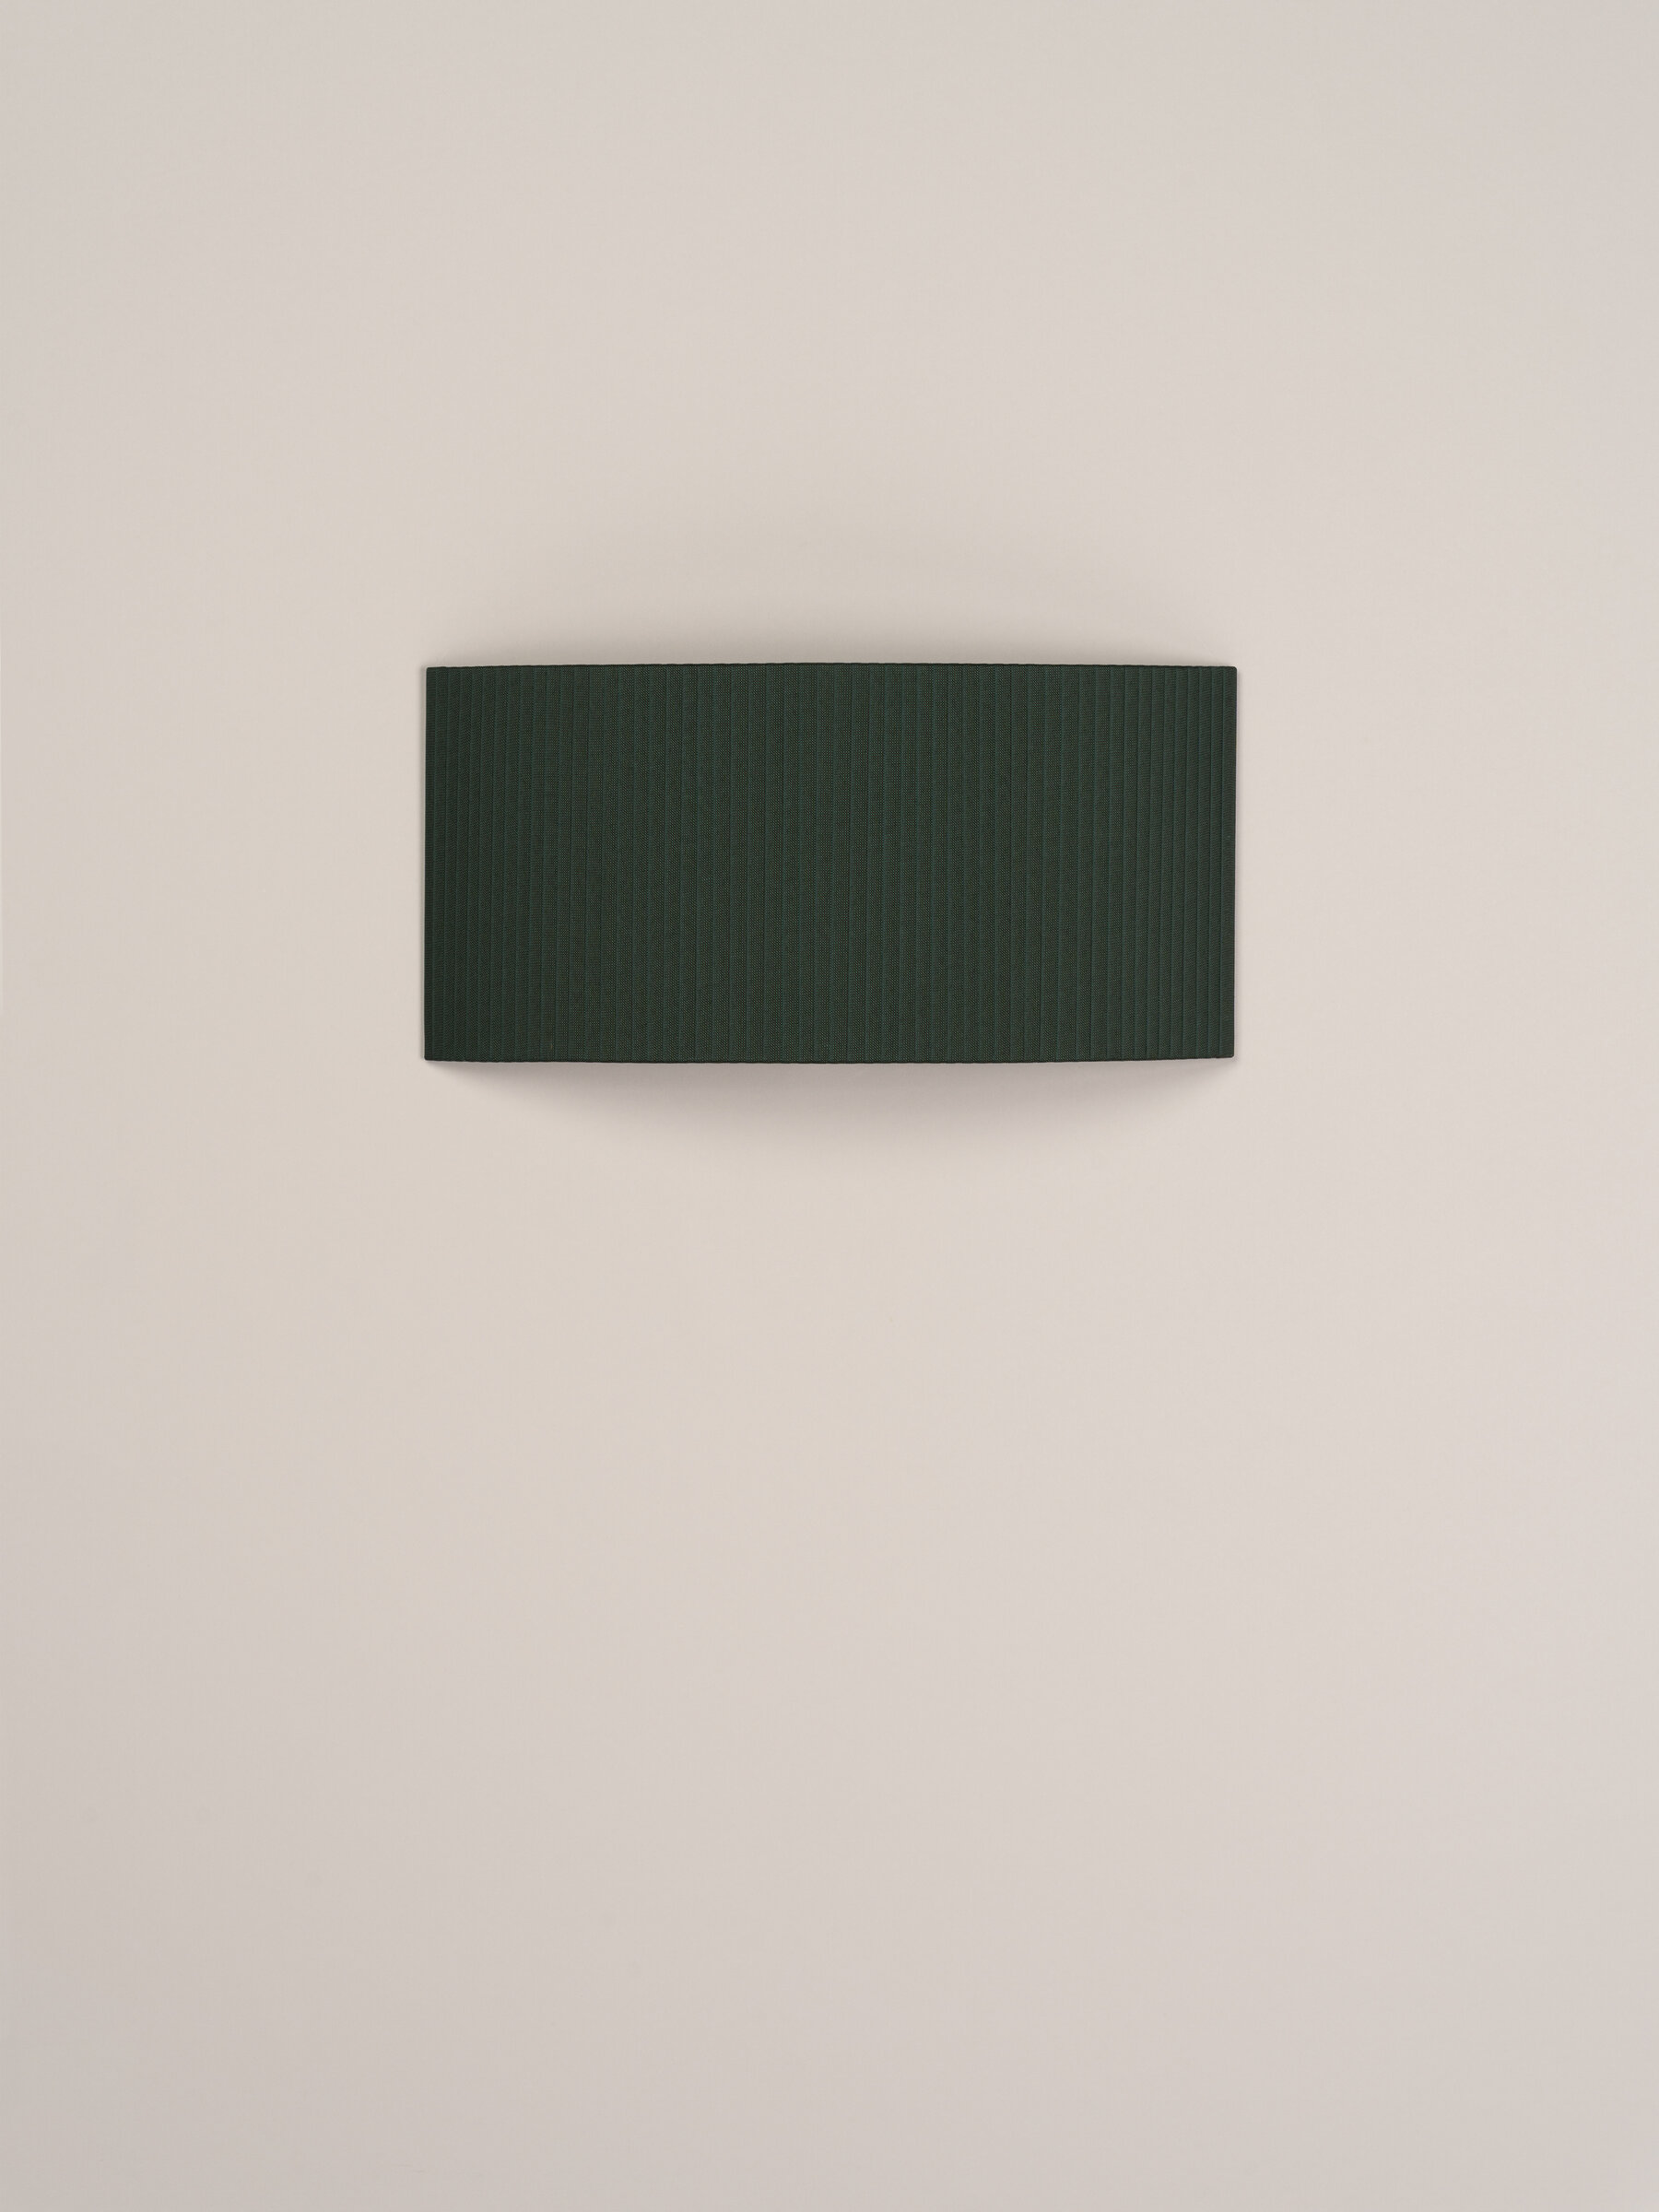 Comodin-Rectangular-Verde-OFF-Enric-Badrinas-2020-x2400